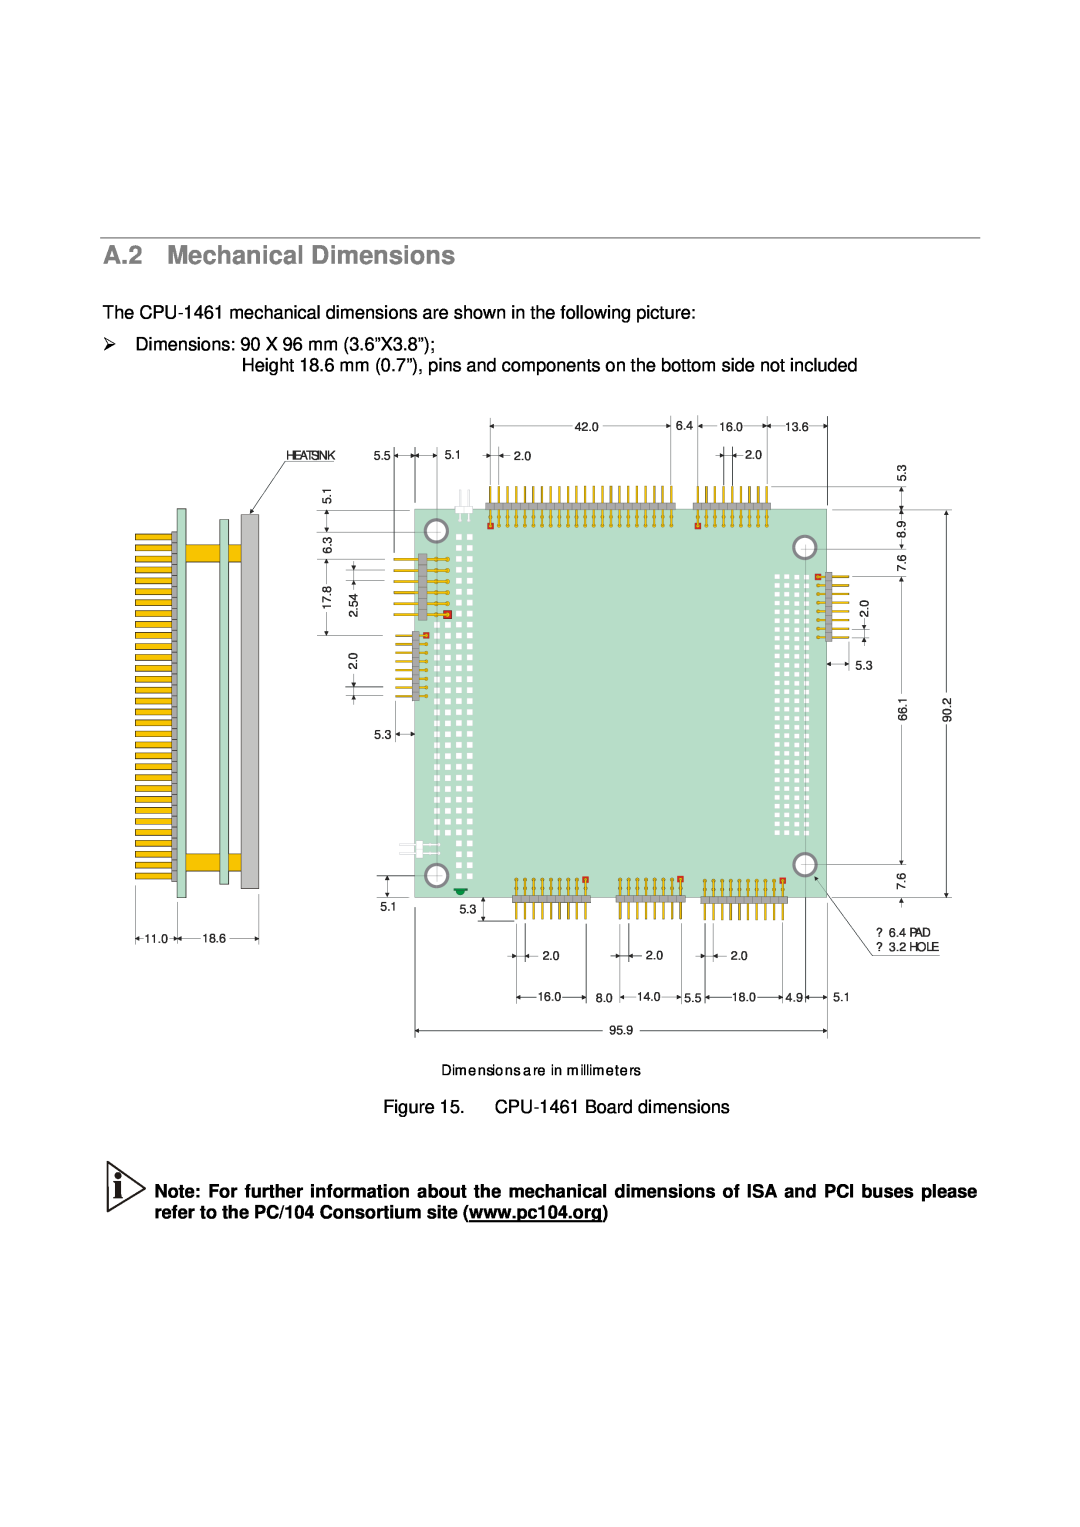 Eurotech Appliances user manual A.2 Mechanical Dimensions, ¾ Dimensions 90 X 96 mm 3.6”X3.8”, CPU-1461 Board dimensions 